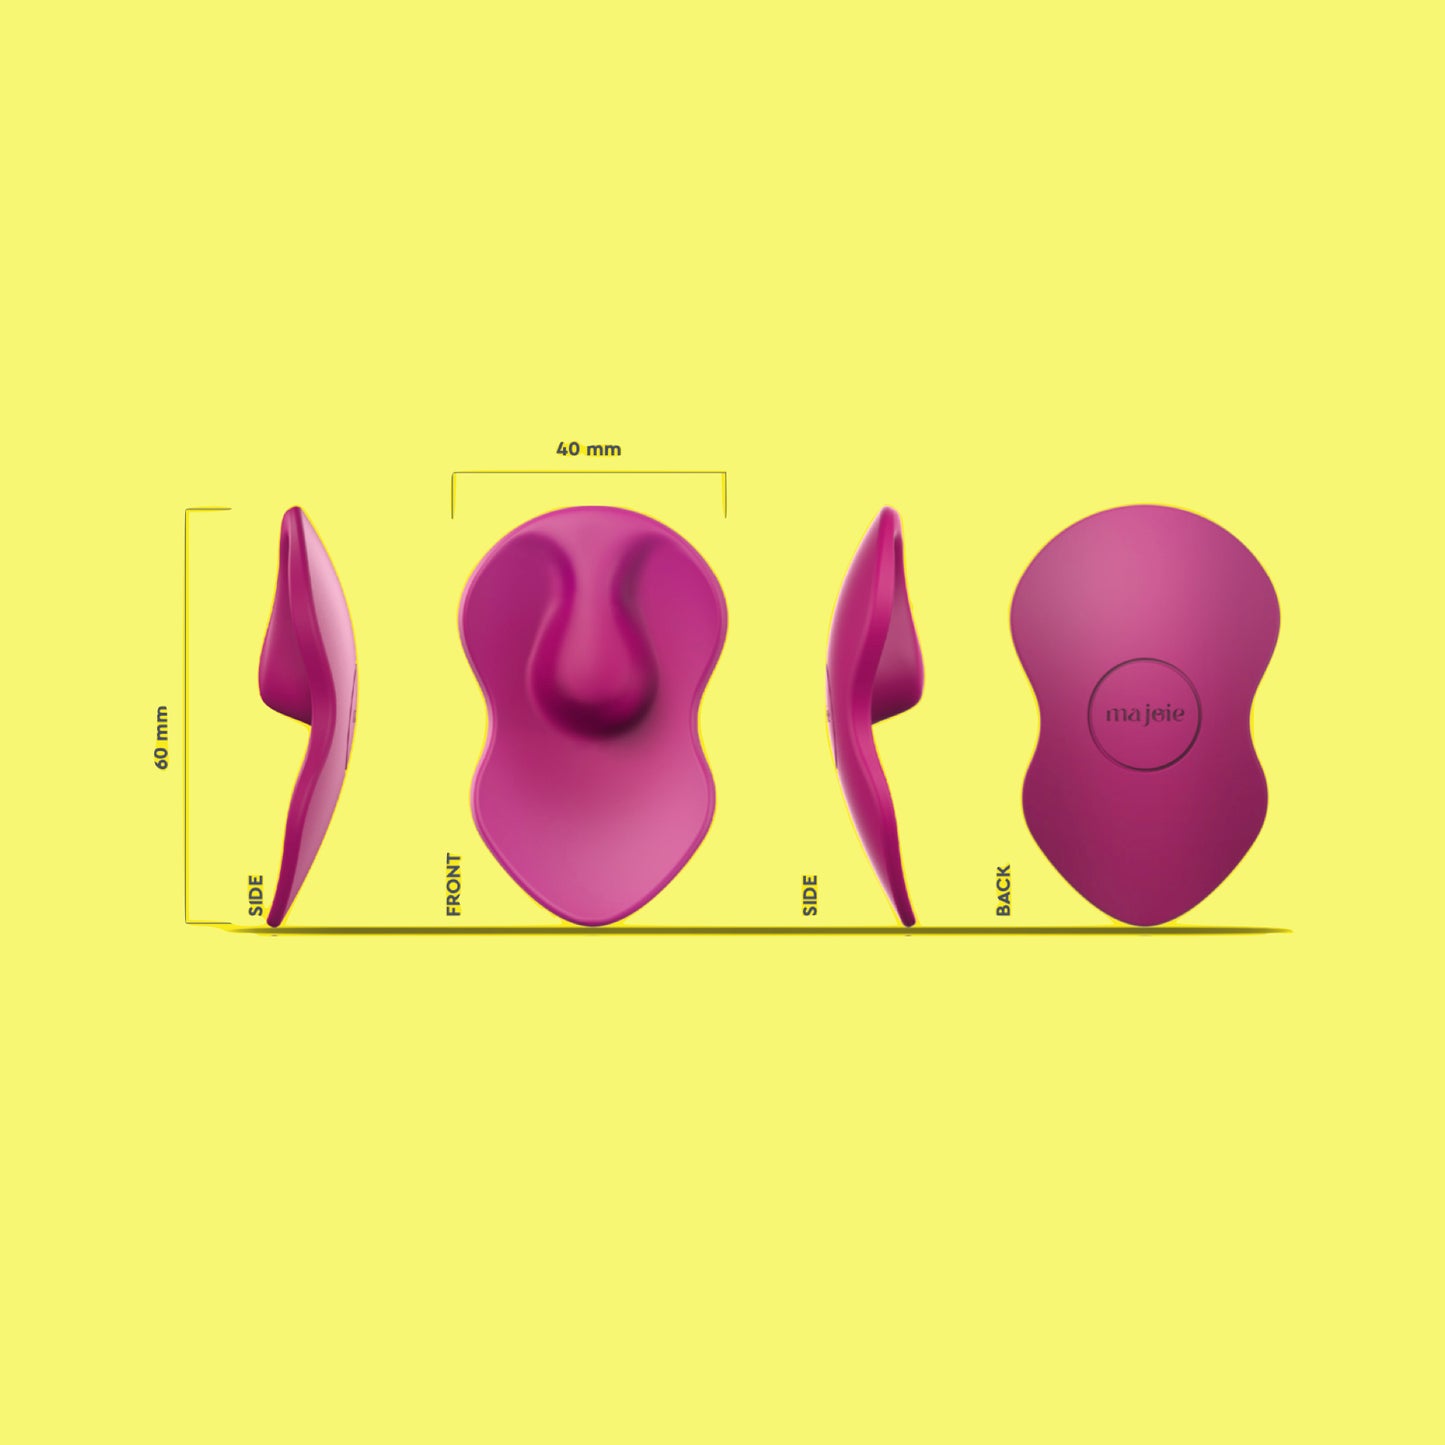 clitoris stimulator sizes product squared visual 